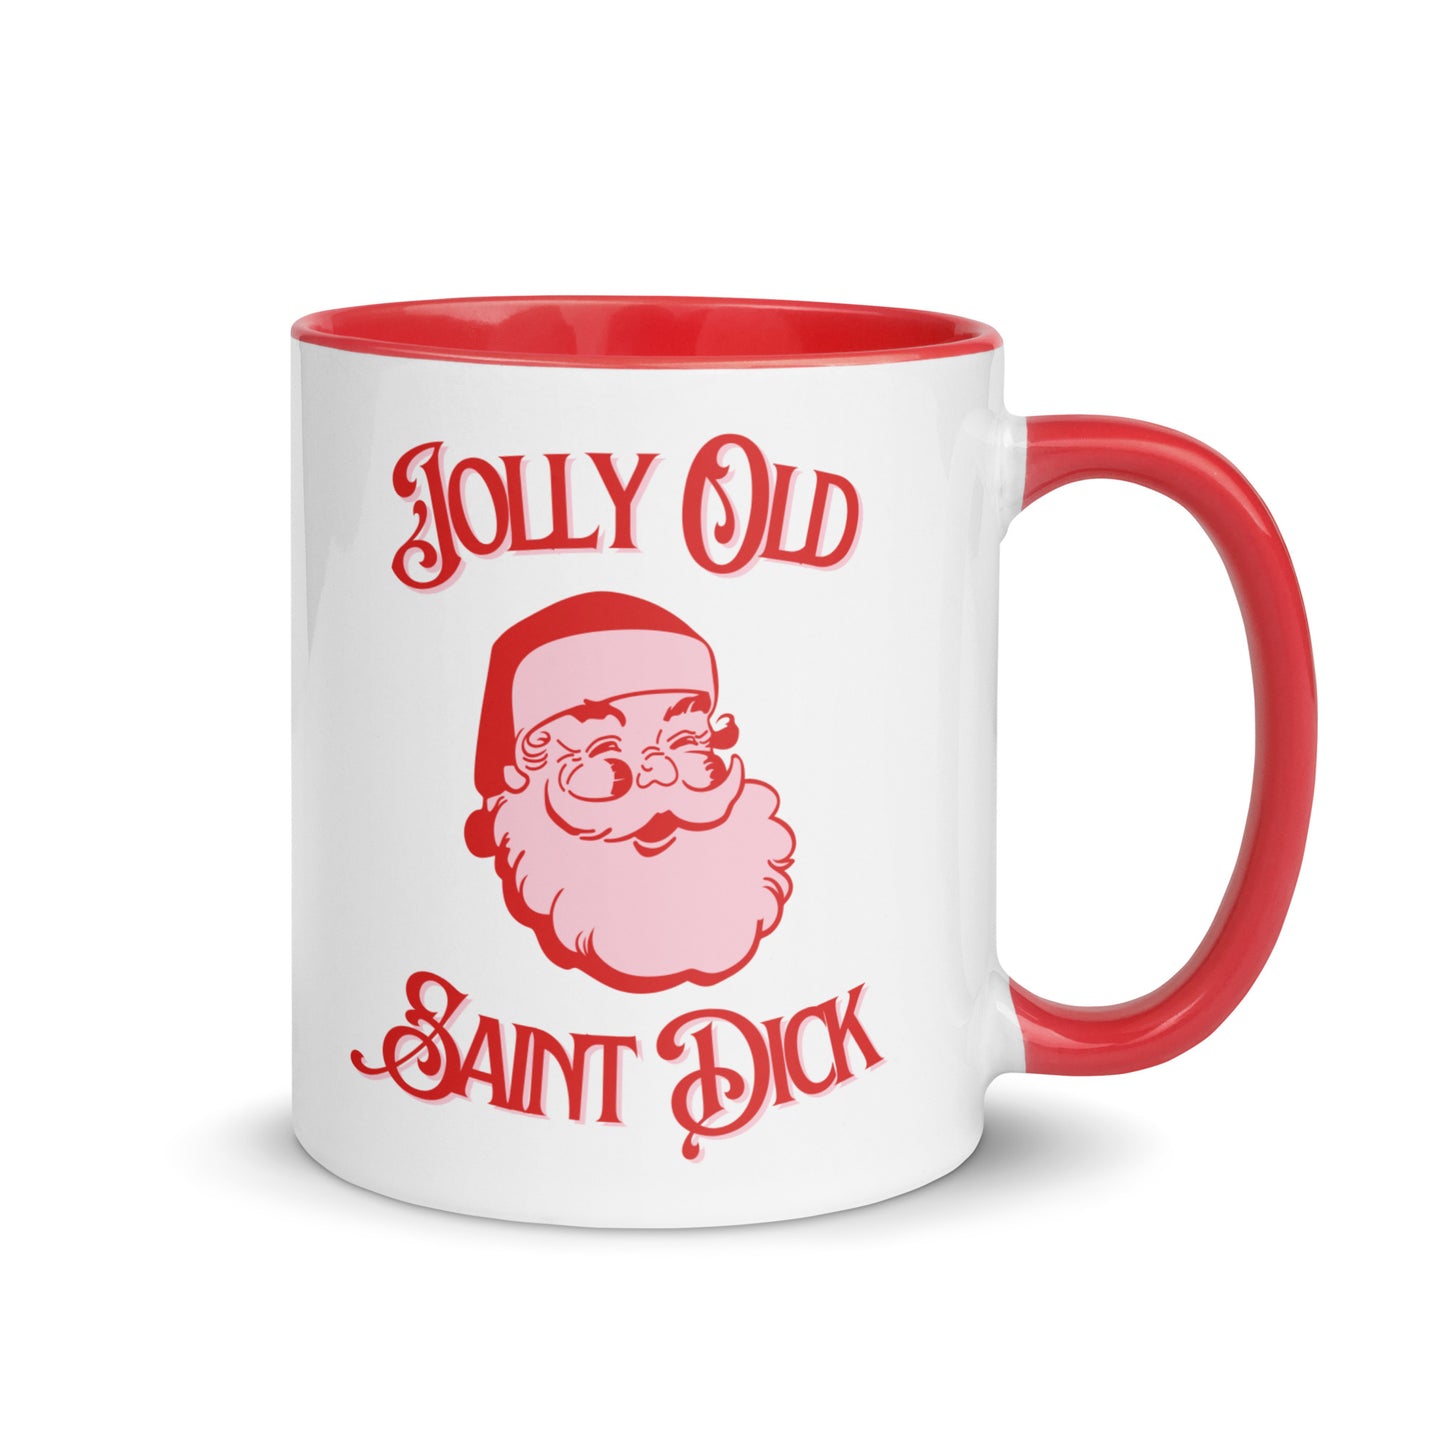 Jolly Old Saint Dick Mug